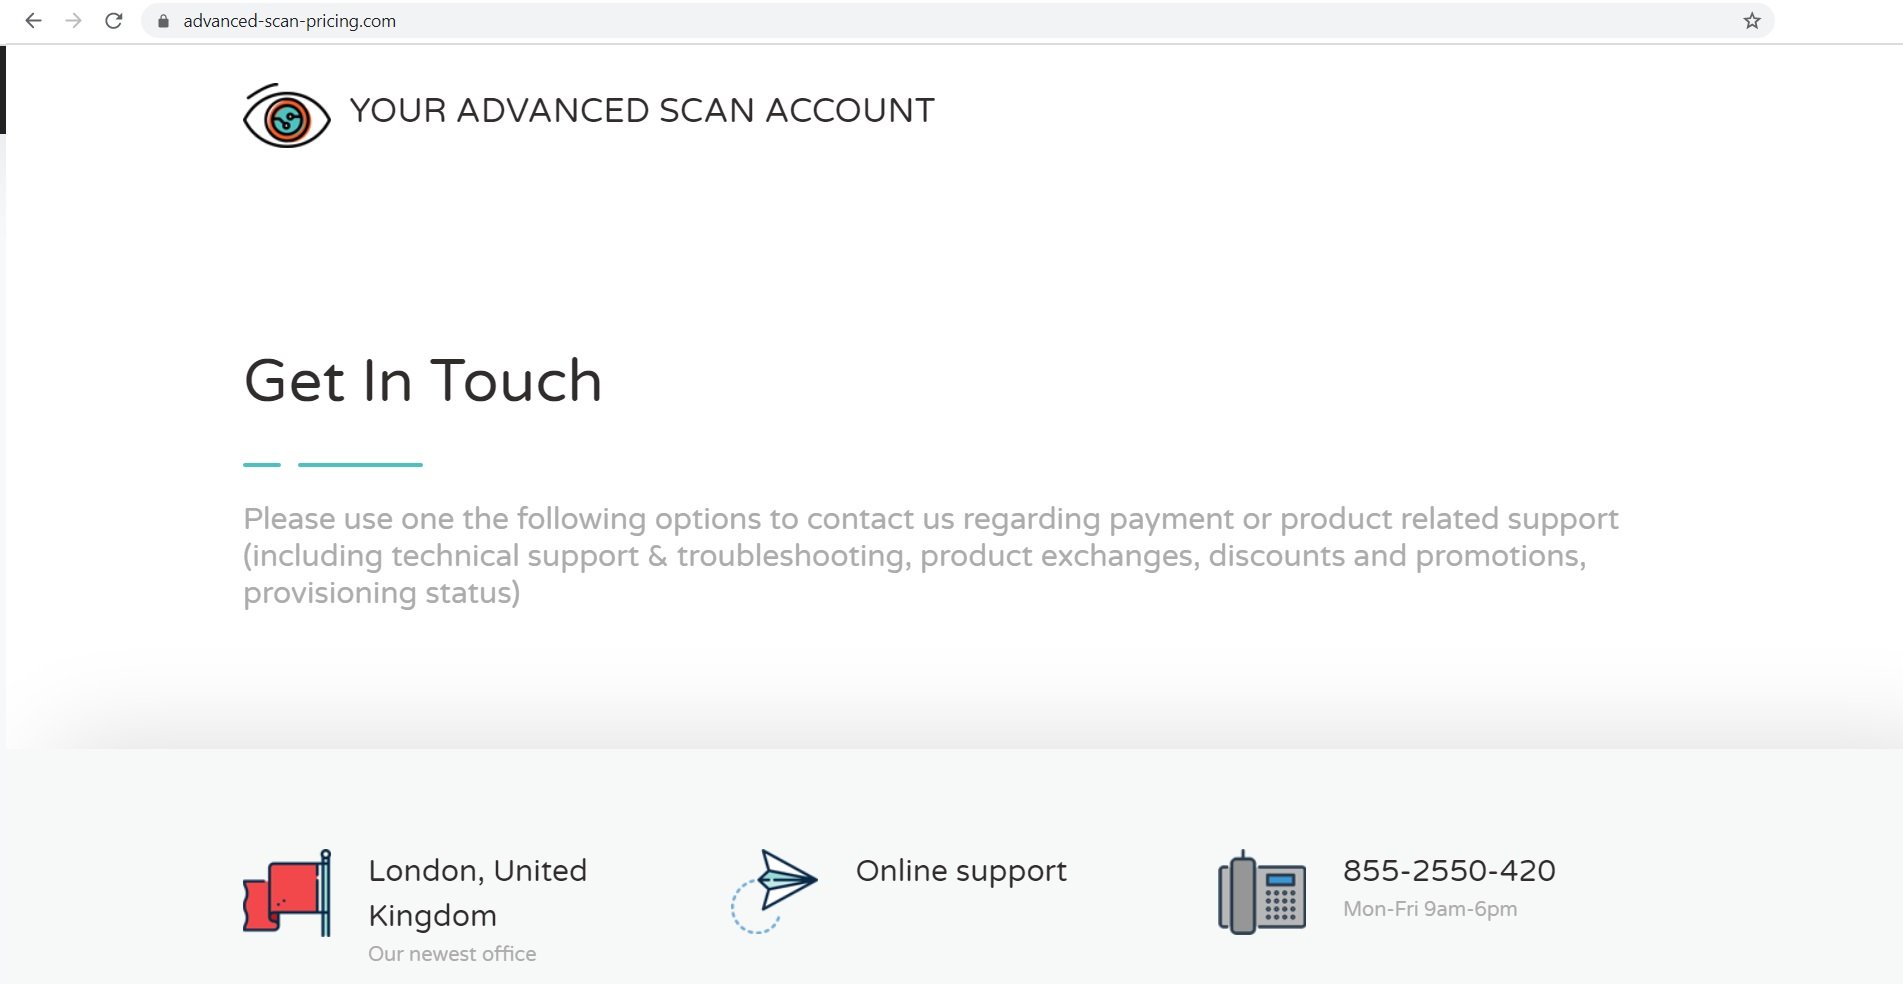 Advanced-scan-pricing.com